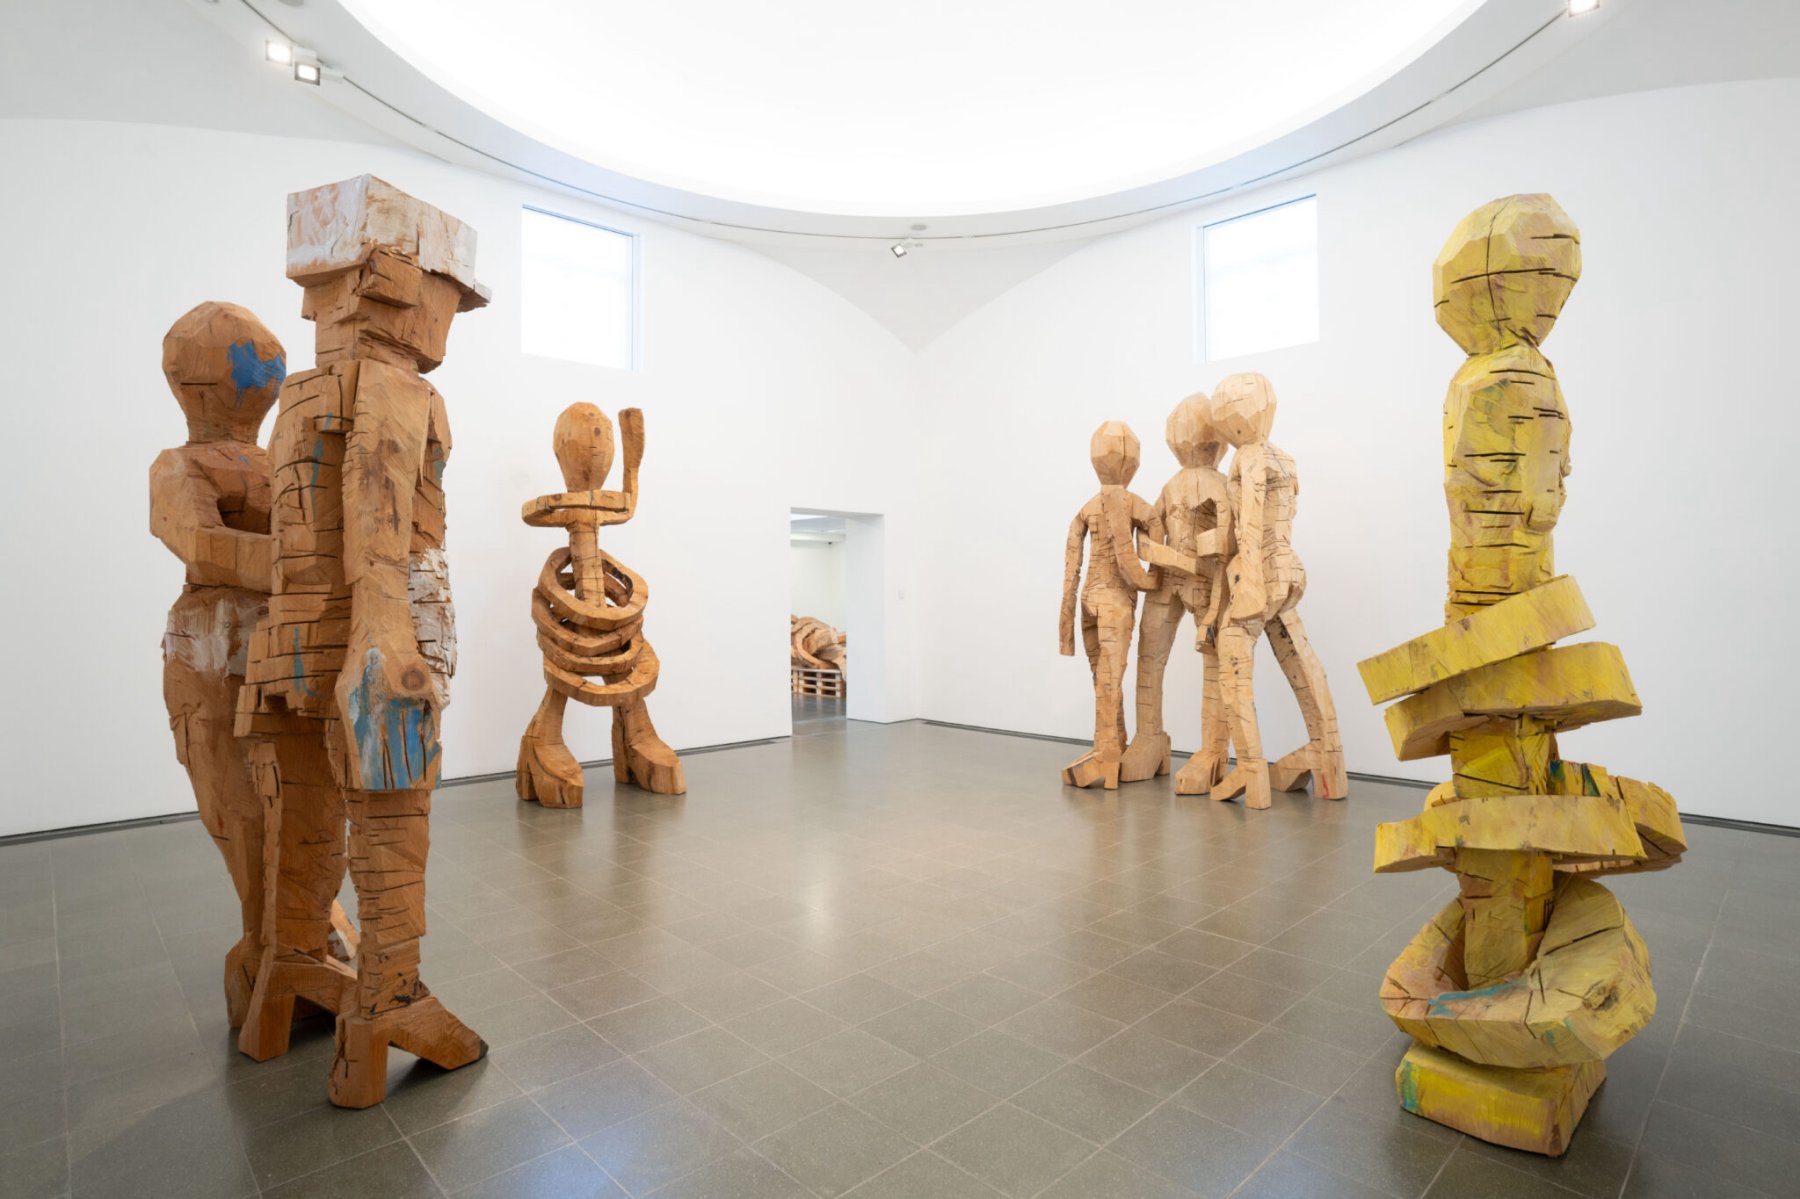 Installation image for Georg Baselitz: Sculptures 2011-2015, at Serpentine Galleries